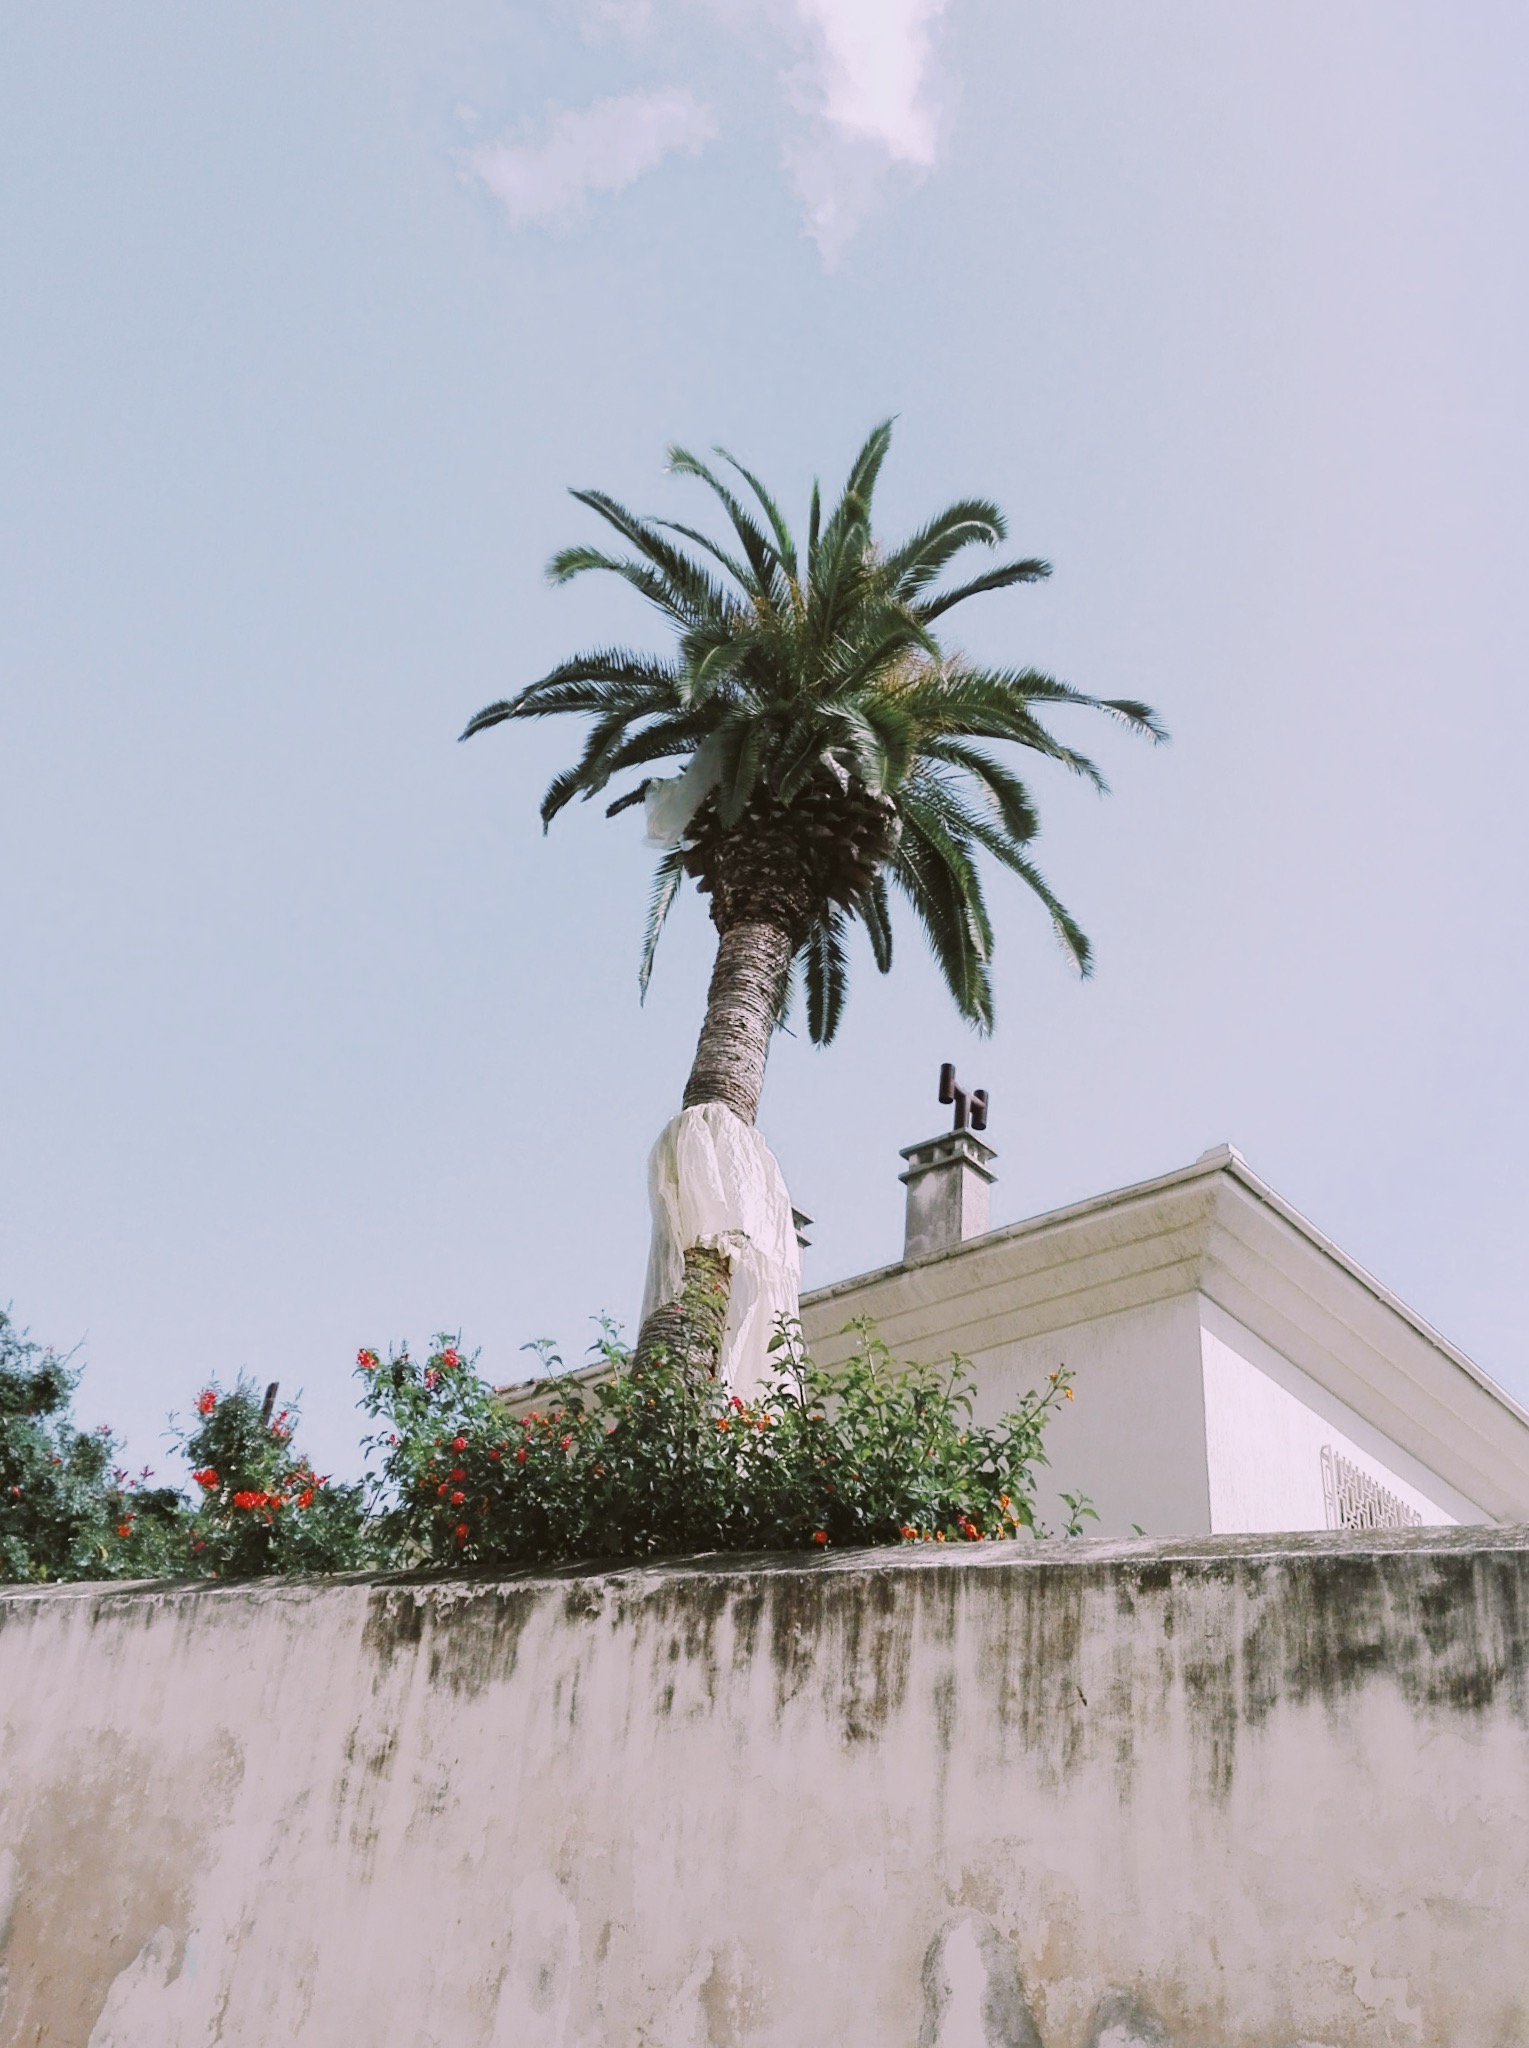 palm tree by a house